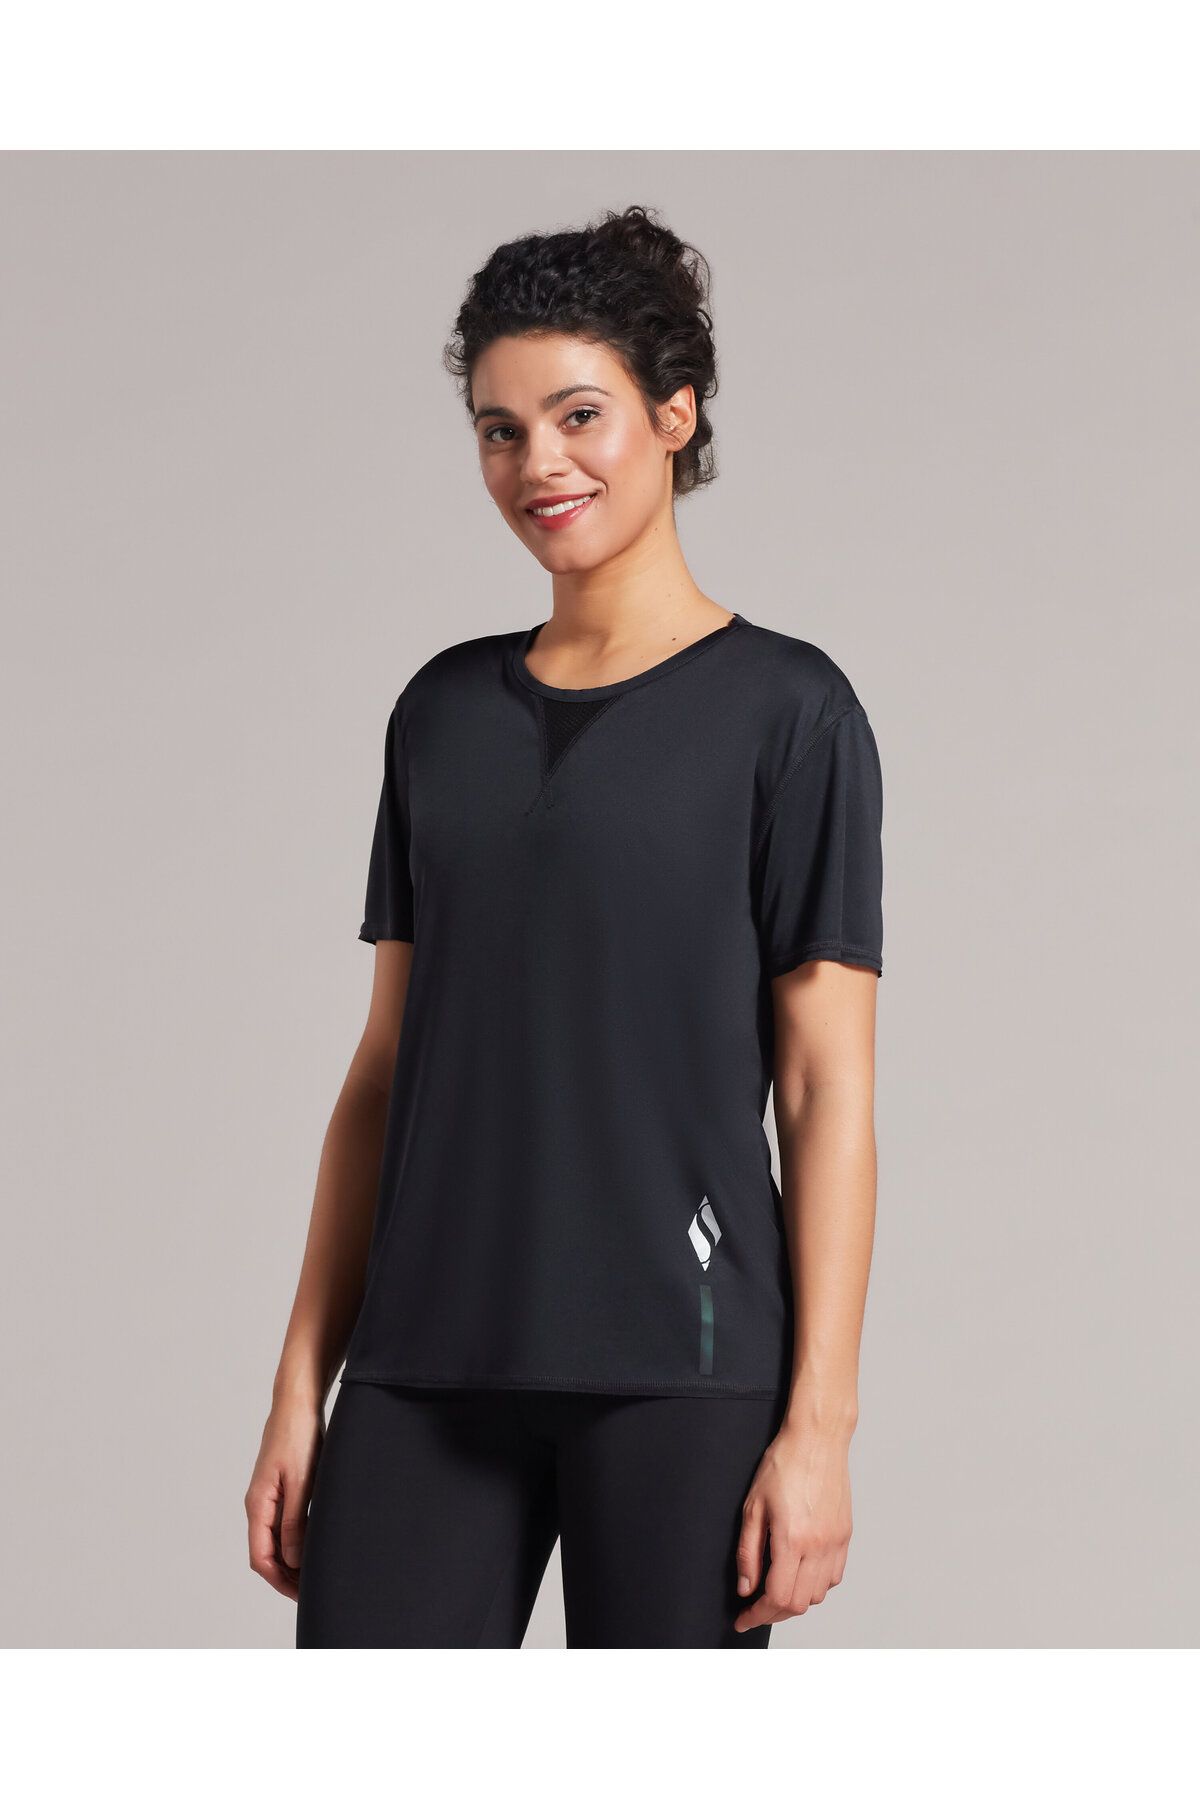 Skechers W Performance Coll. Reflect Logo Crew Neck T-shirt Kadın Siyah Tshirt S231190-001